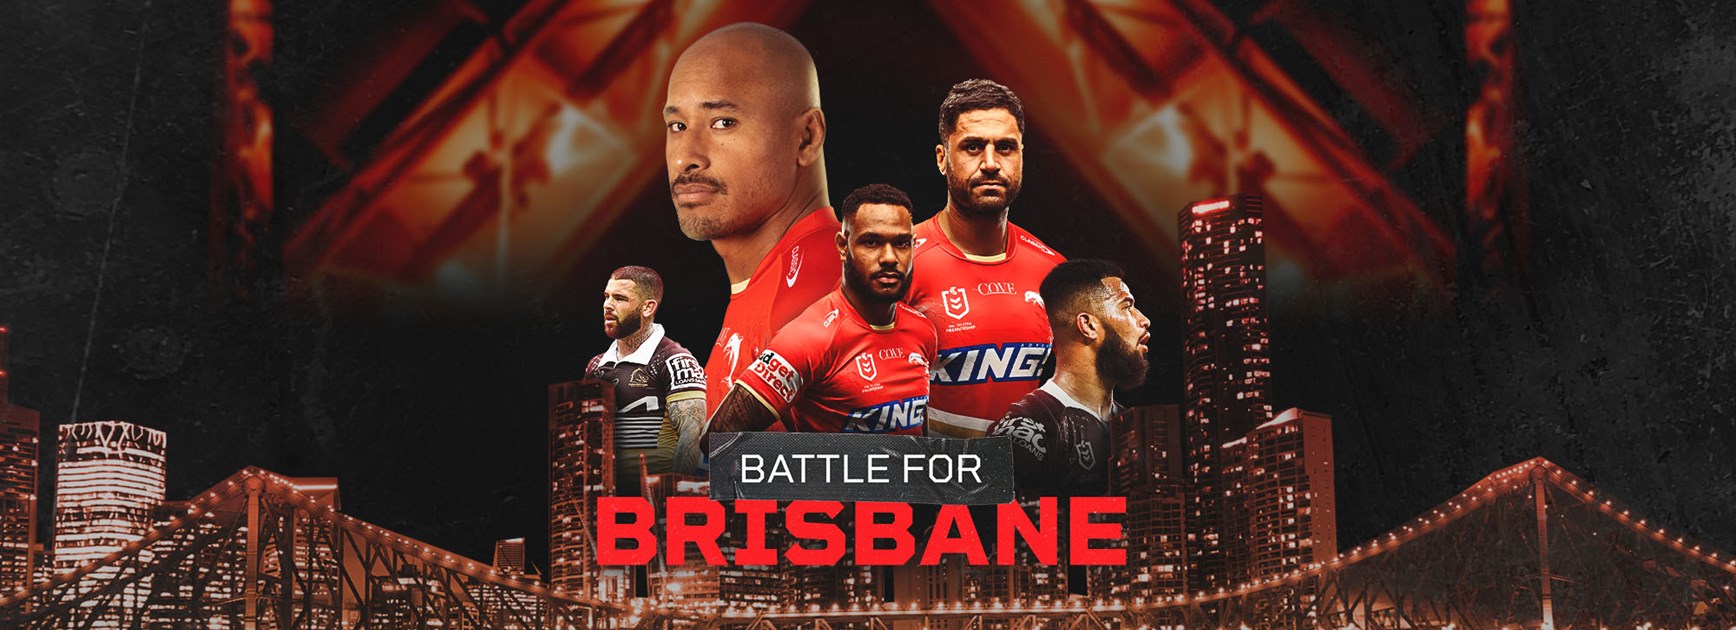 The Battle for Brisbane